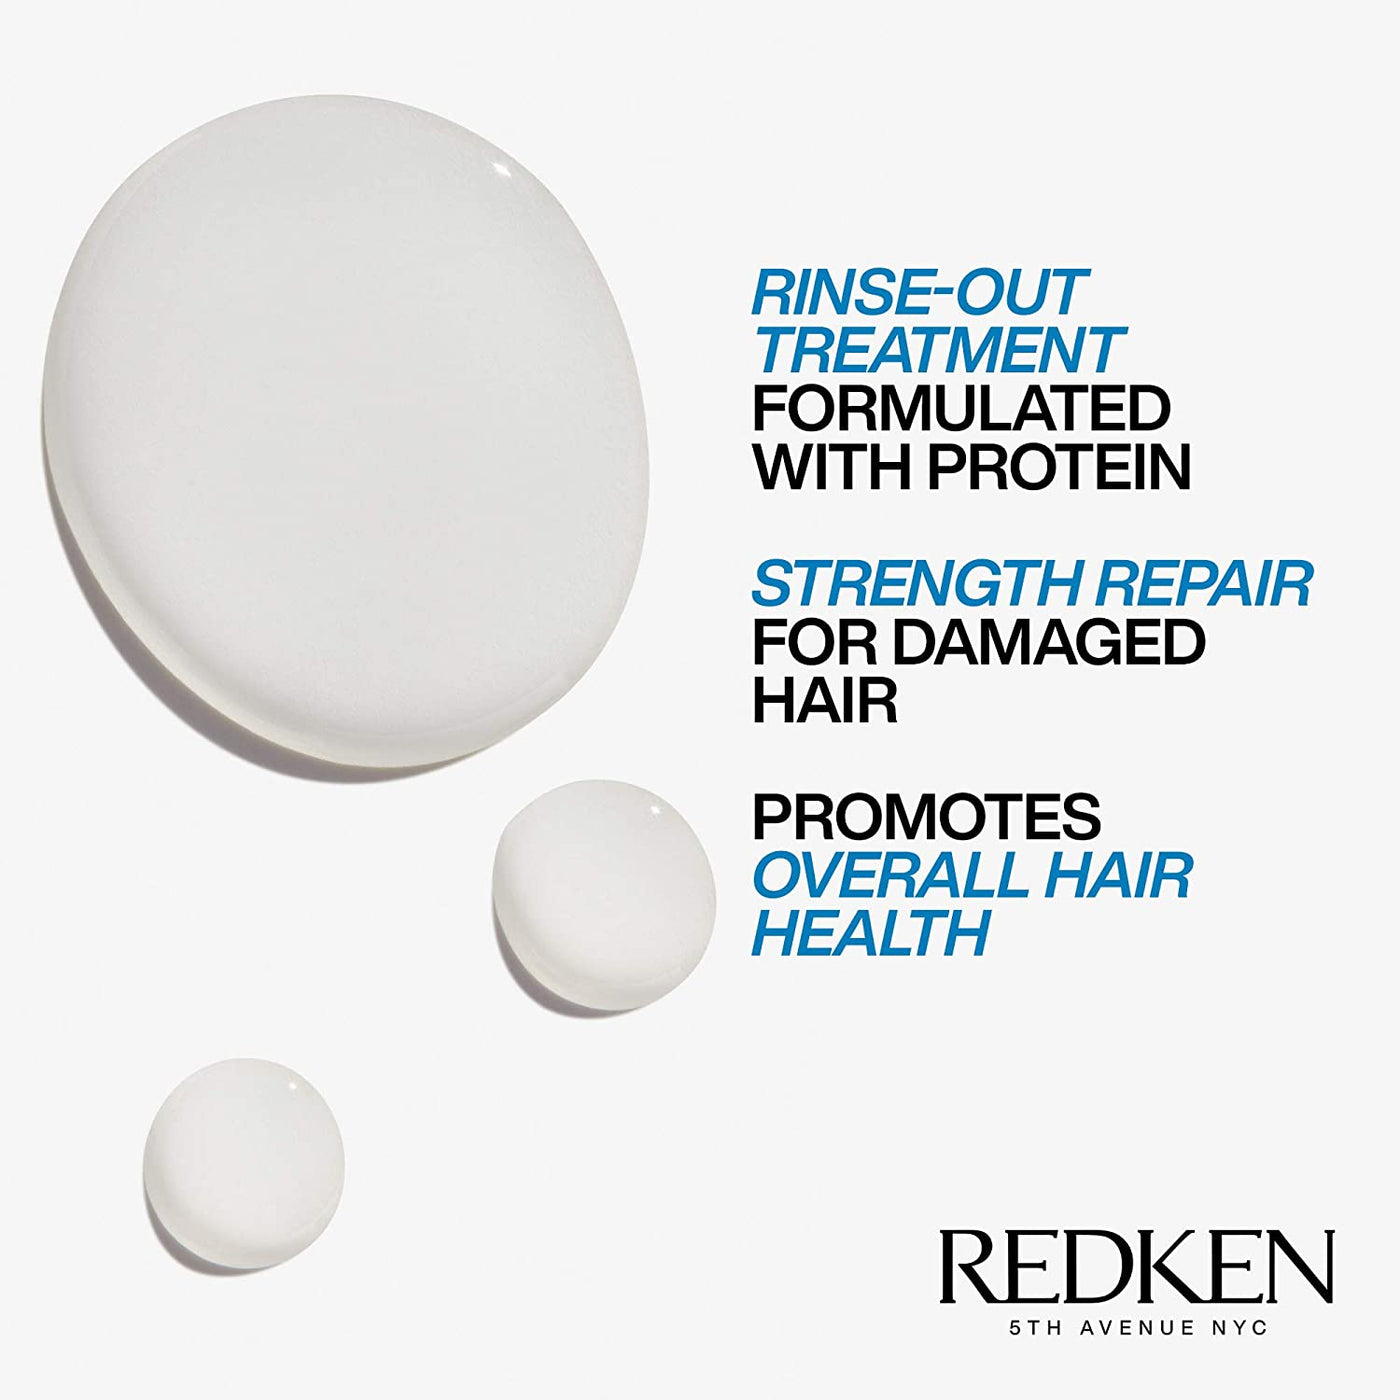 Redken Extreme Cat Protein Hair Treatment Spray 200ml